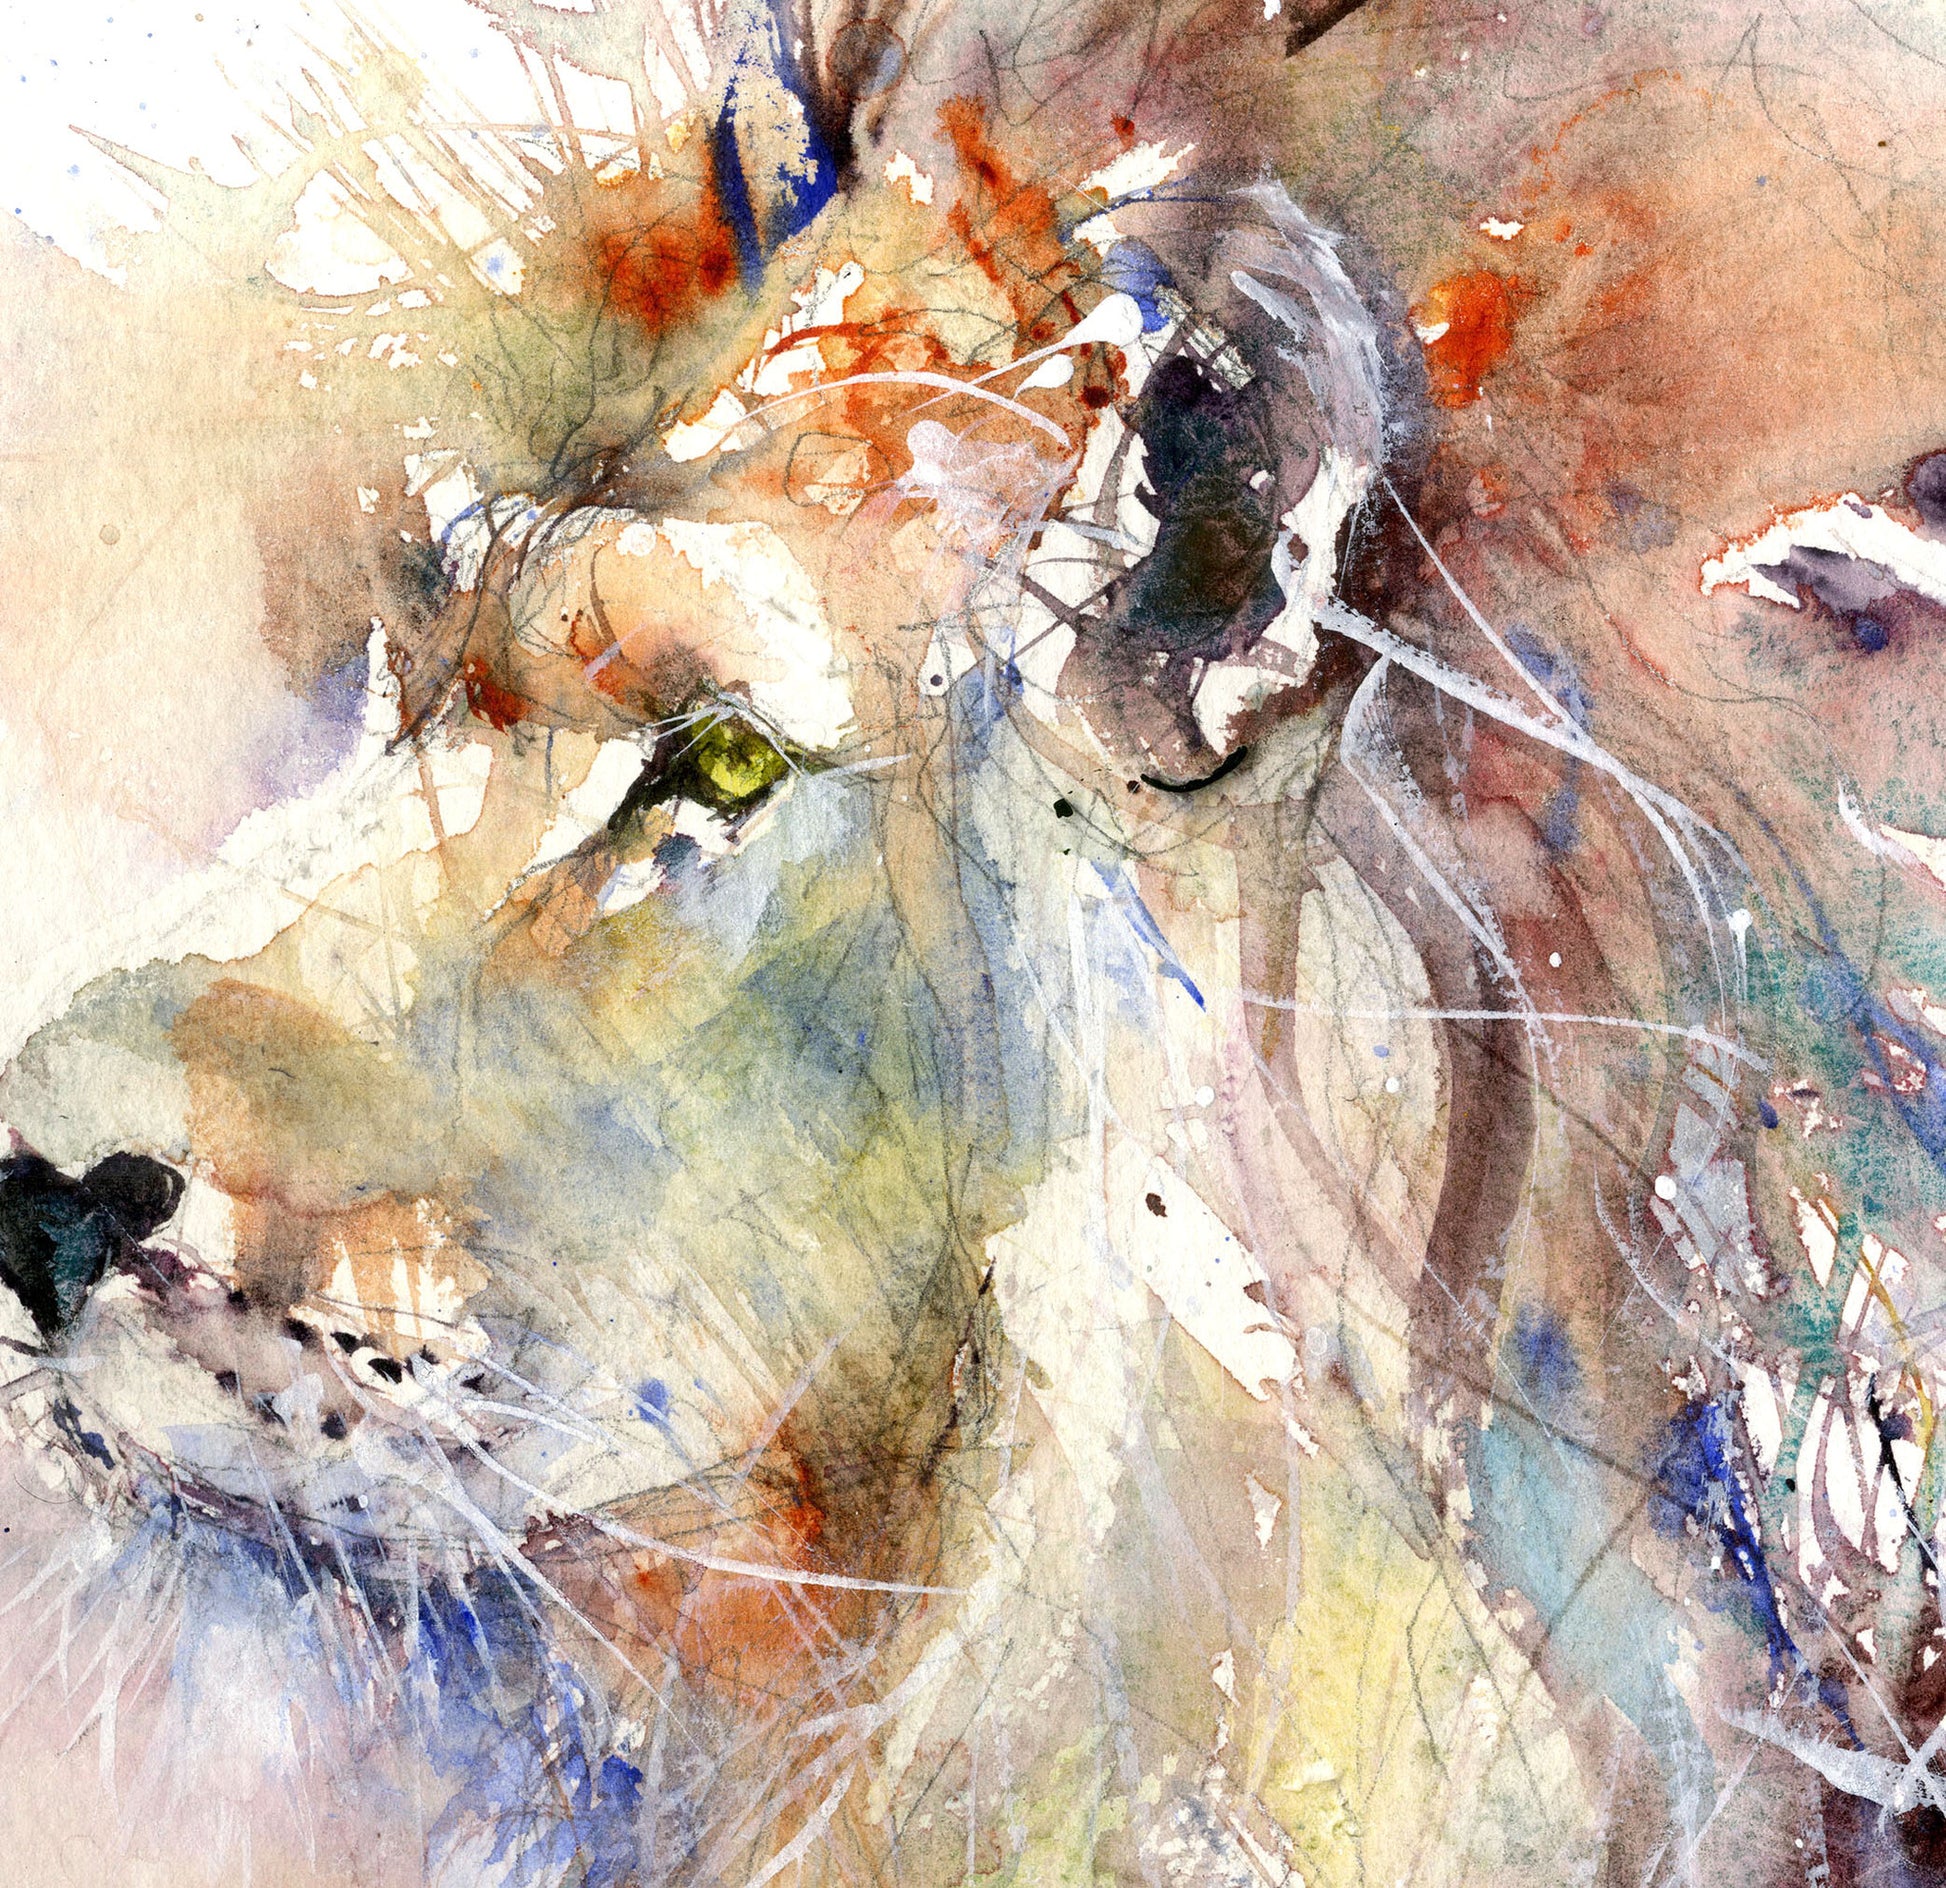 LIMITED EDITON PRINT Asiatic lion - Jen Buckley Art limited edition animal art prints